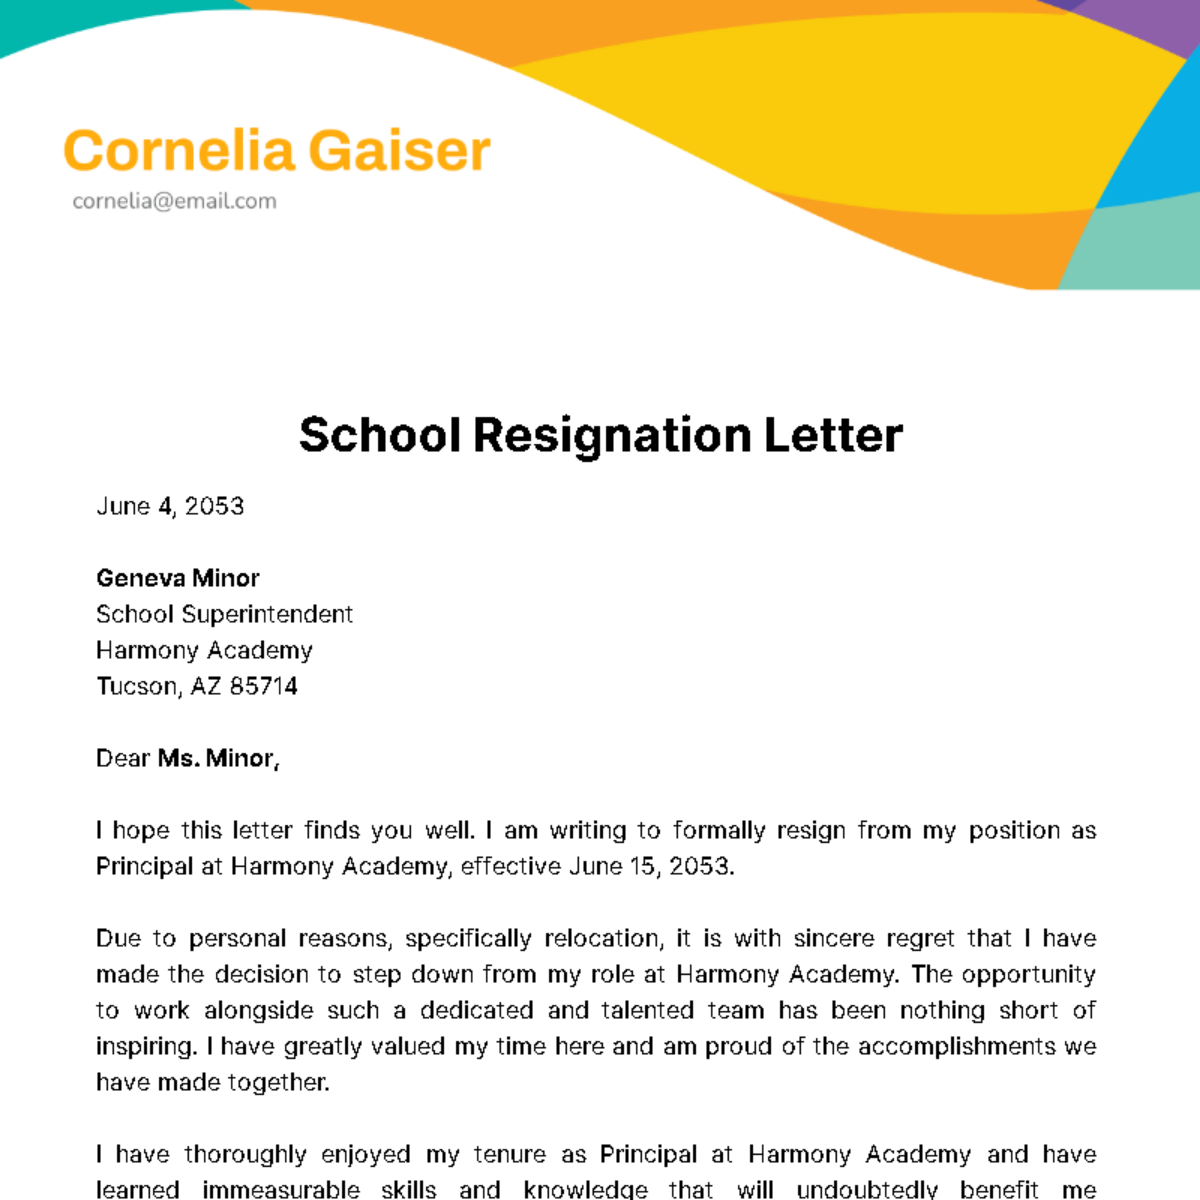 School Resignation Letter Template